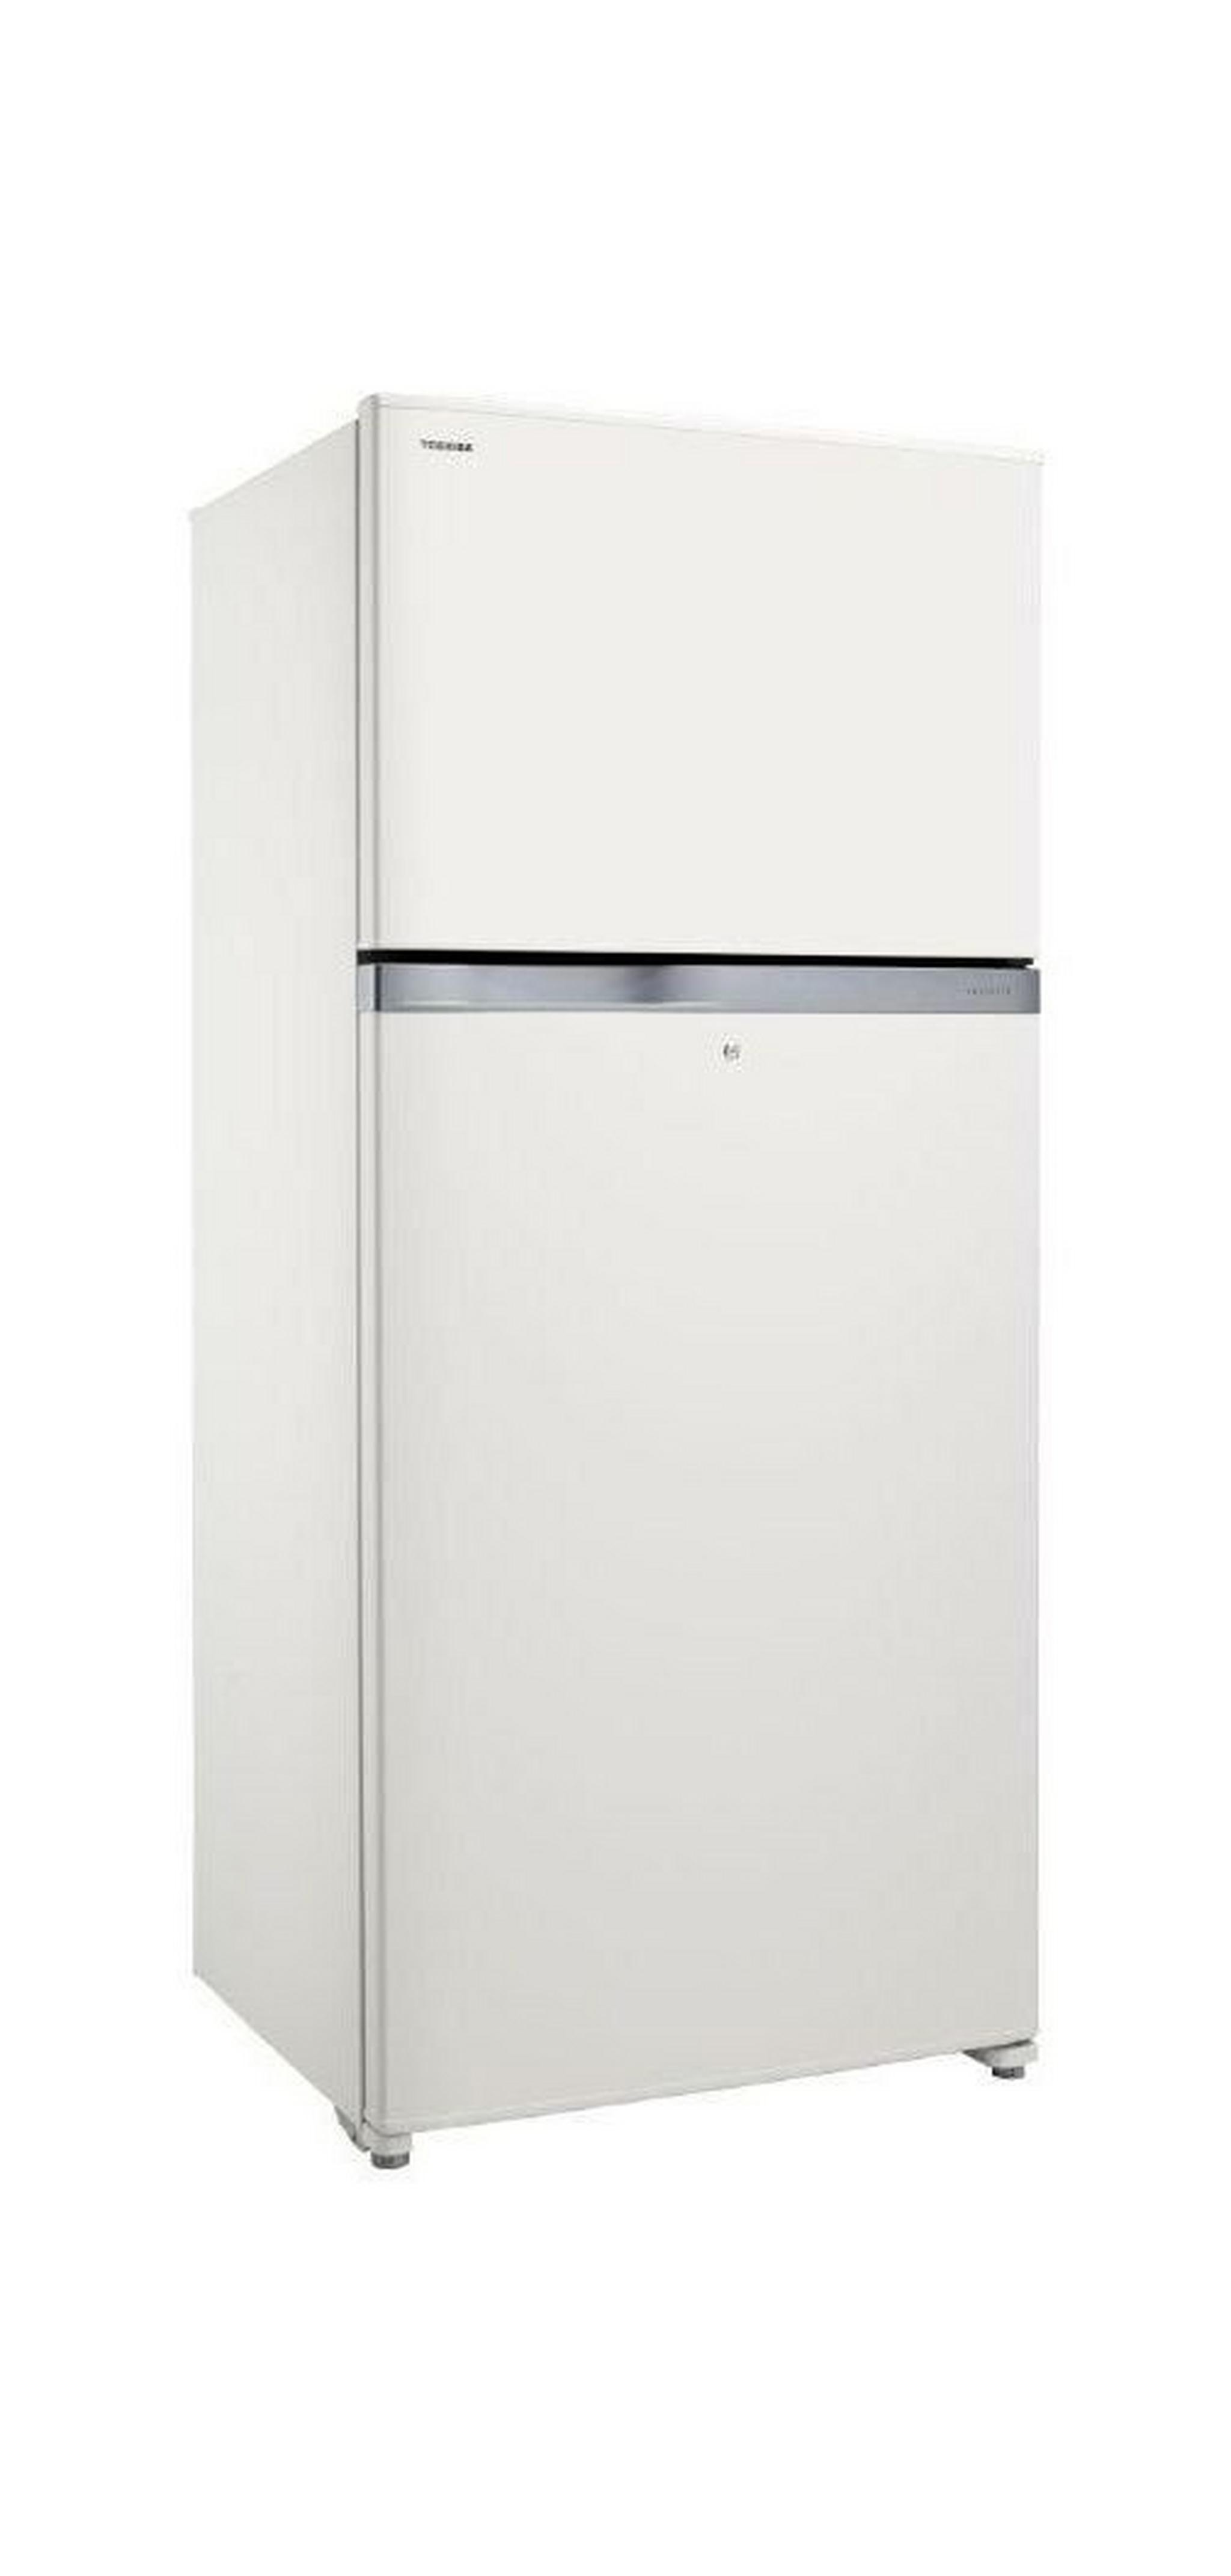 Toshiba 25 Cubic Feet Top Mount Refrigerator (GR-A820U) - White